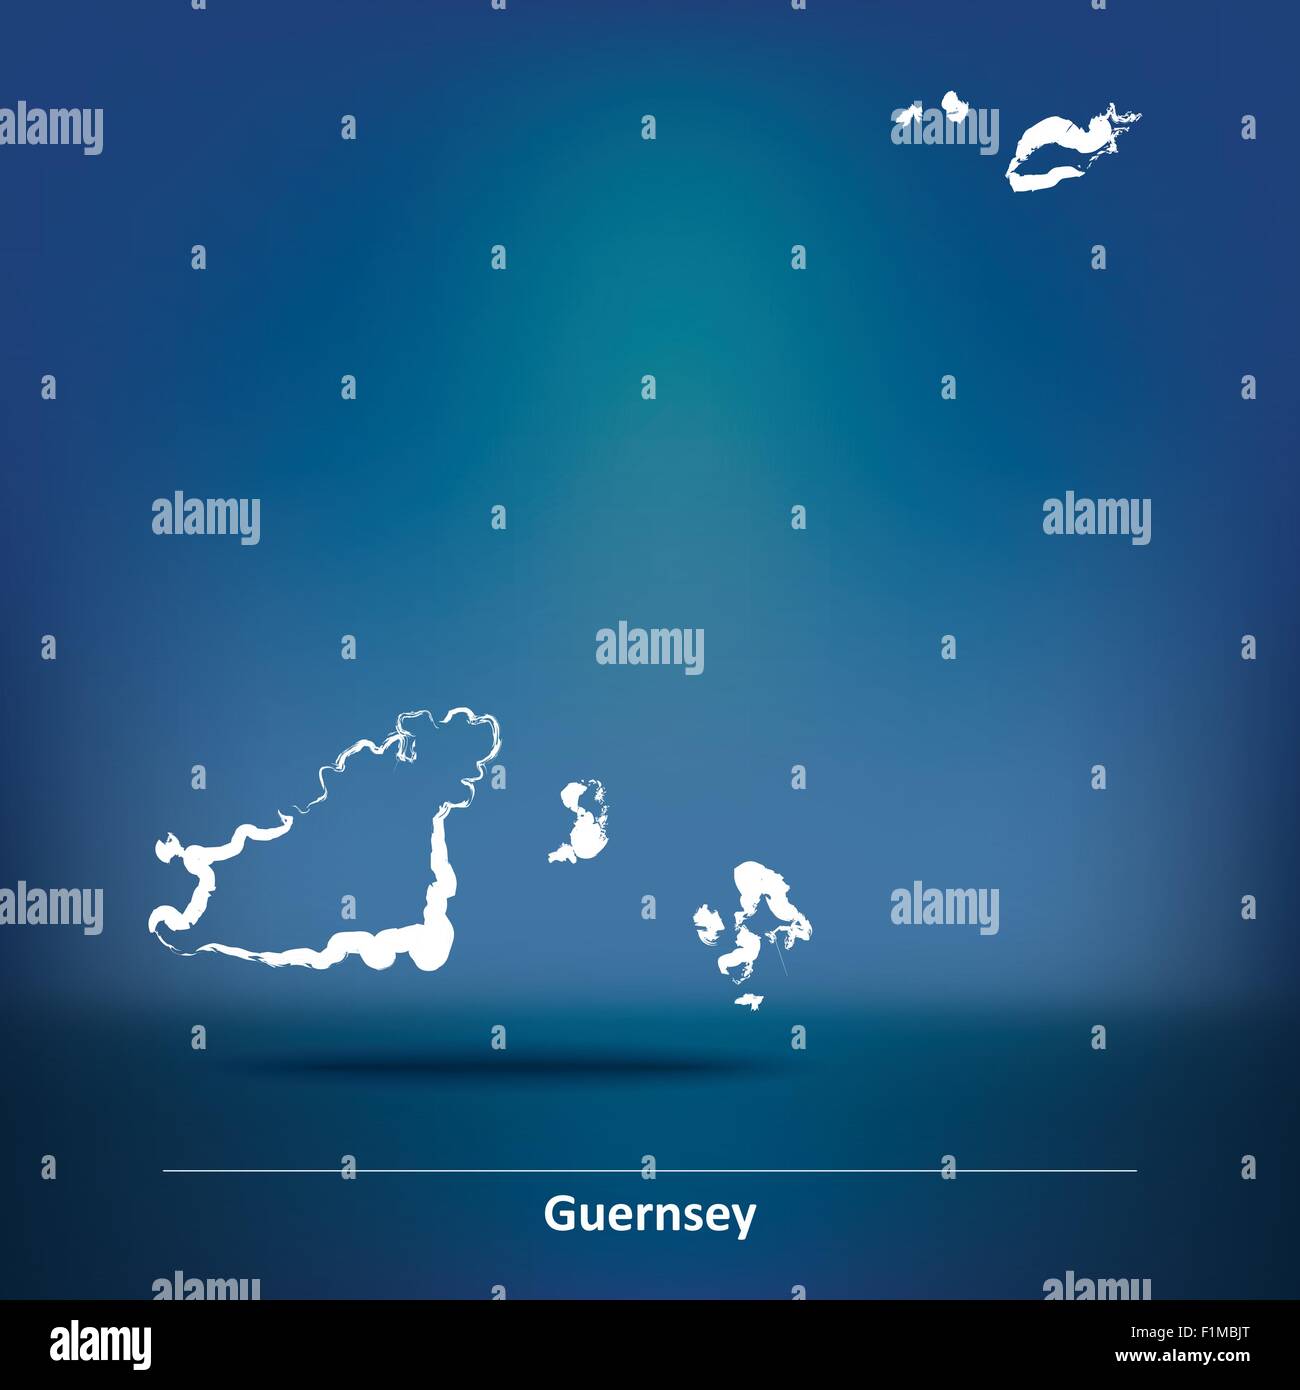 Karte von Guernsey - Vektor-Illustration Doodle Stock Vektor